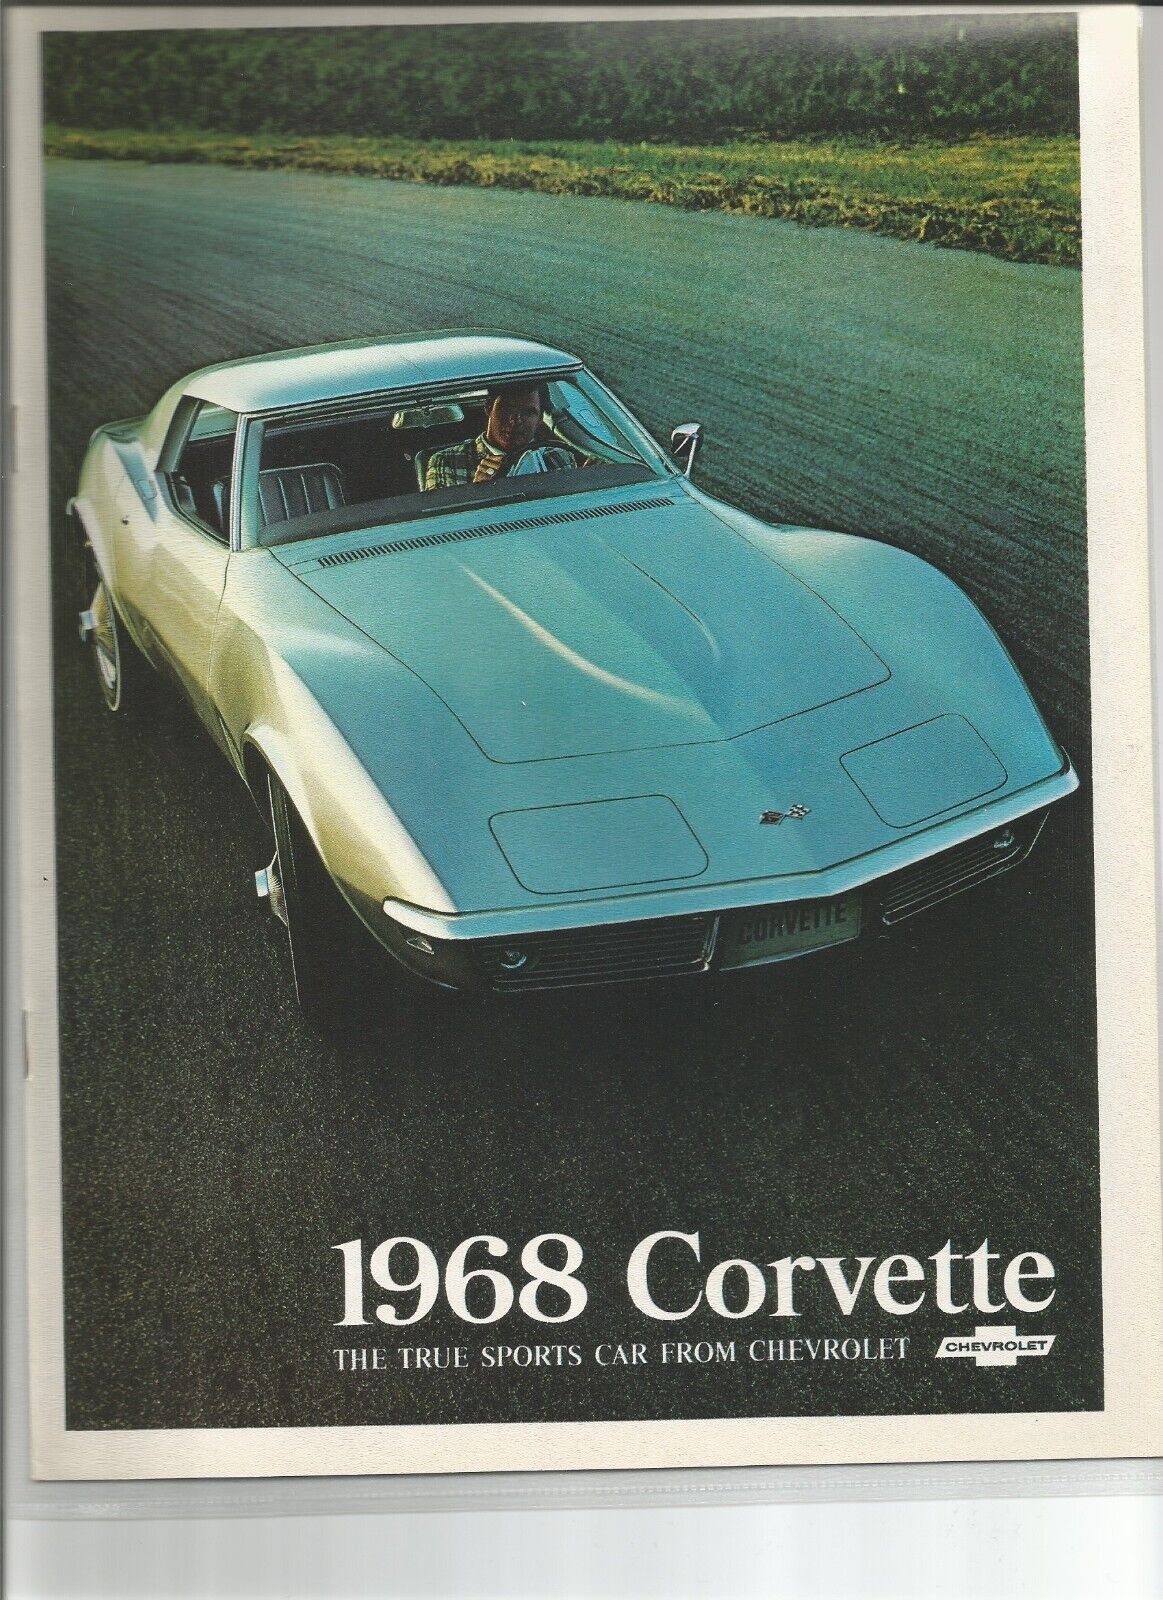 Original 1968 Chevrolet Corvette dealer sales brochure, catalog